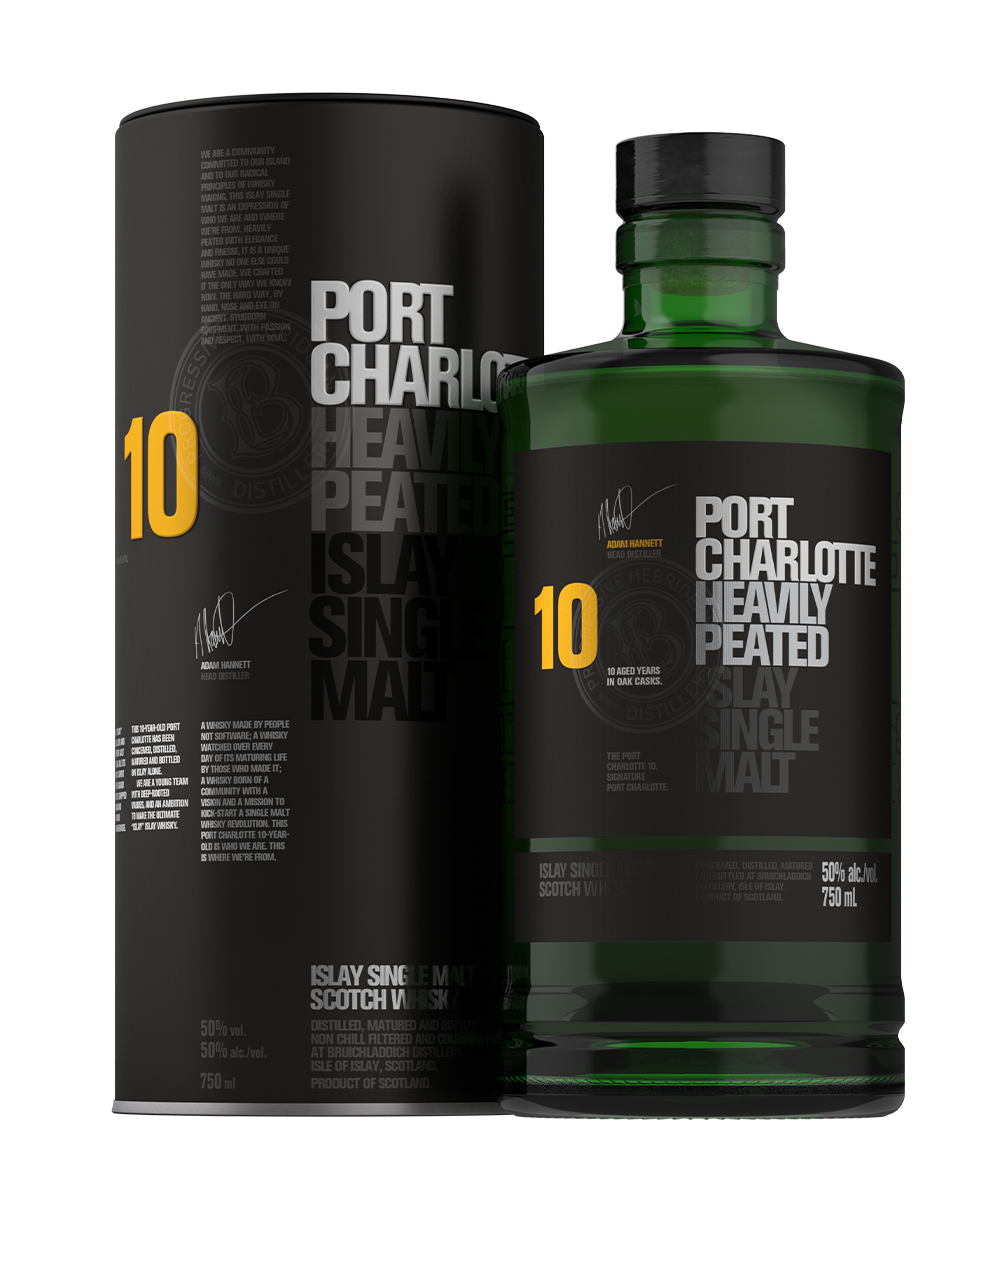 Port Charlotte (Bruichladdich) PC10 Tro Na Linntean (2012) - The Whisky  Barrel